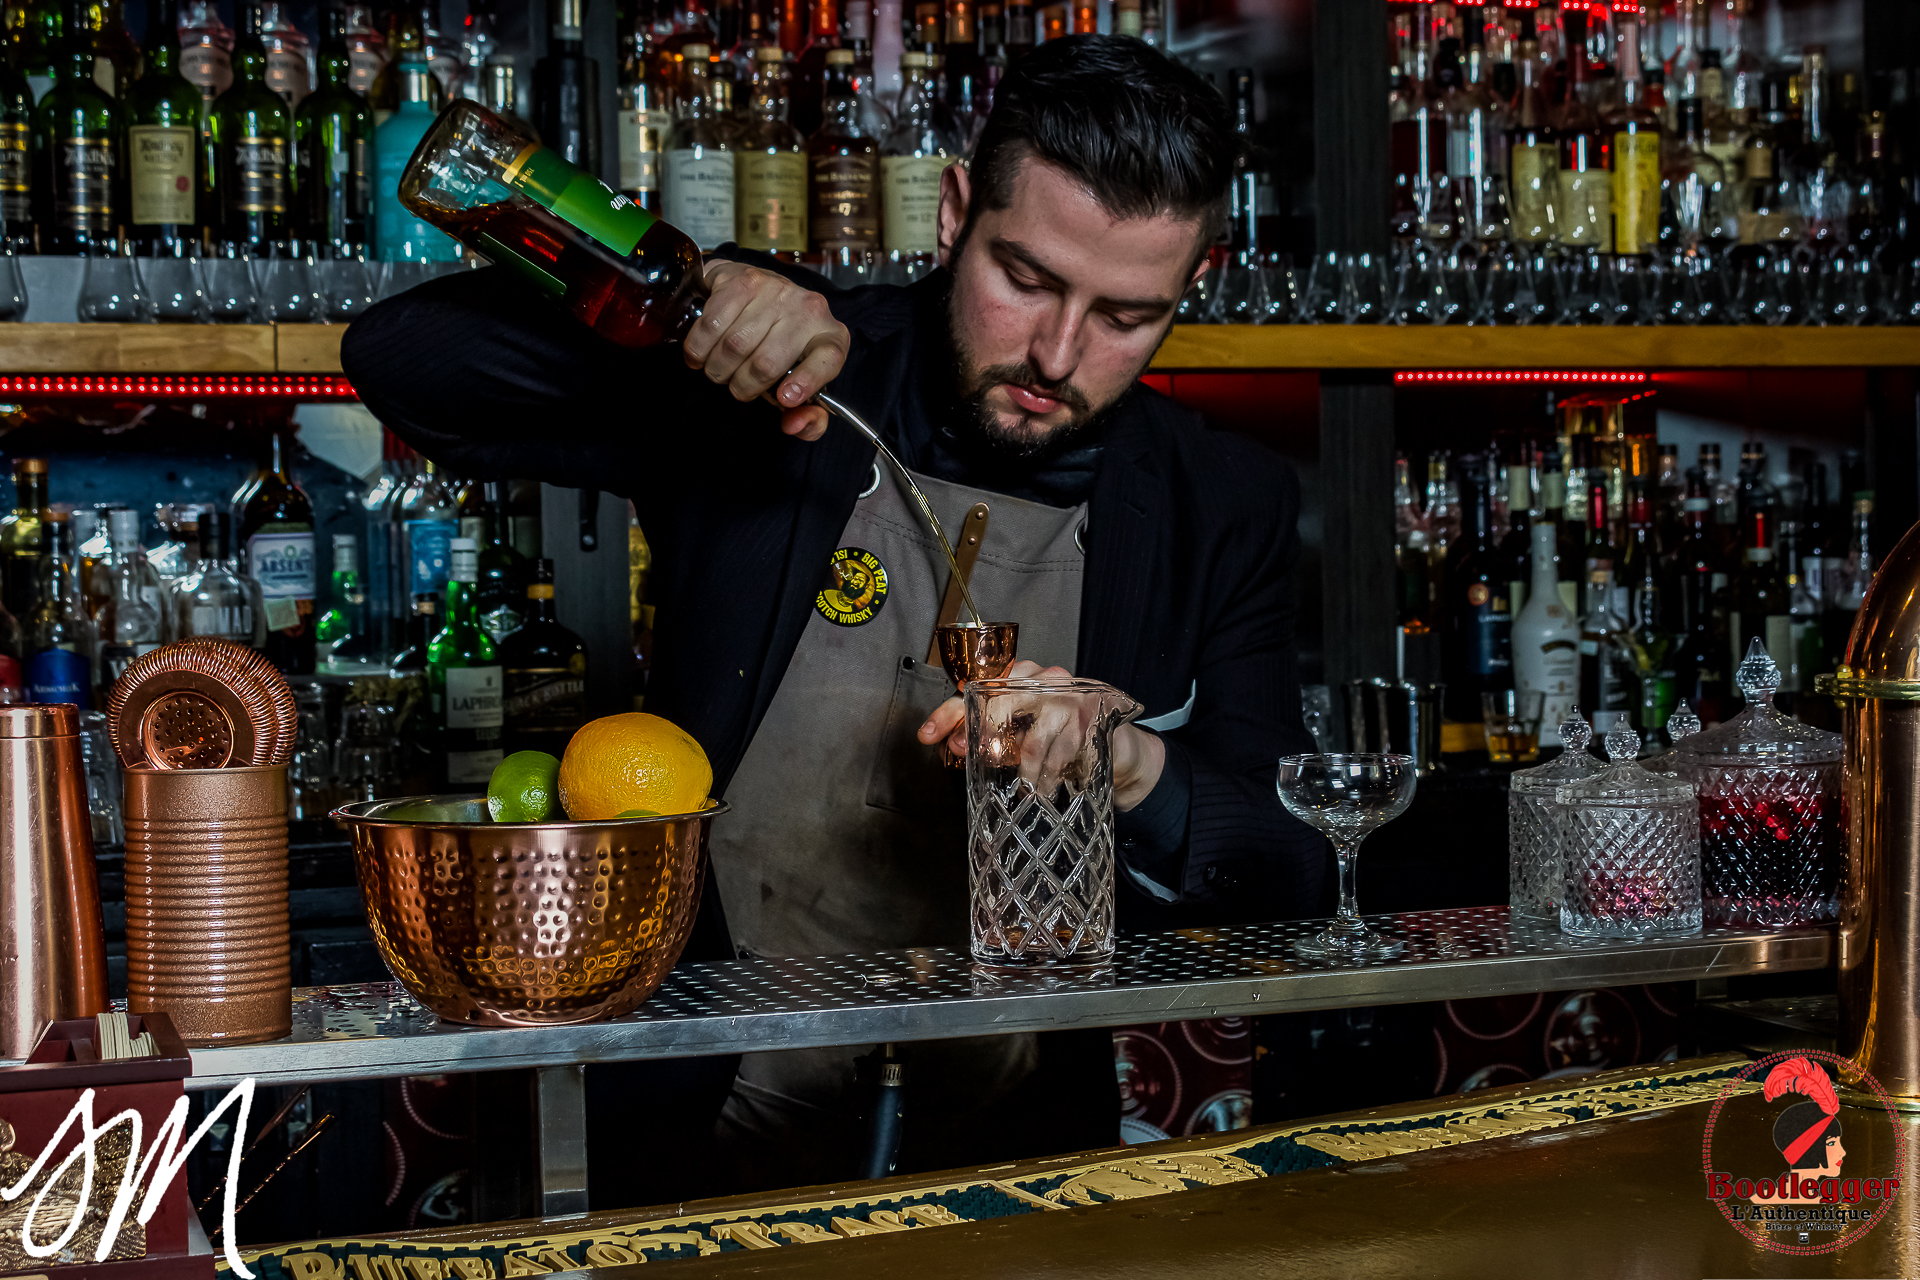 christ desjardins Bartender Bootlegger Montreal cocktail bar